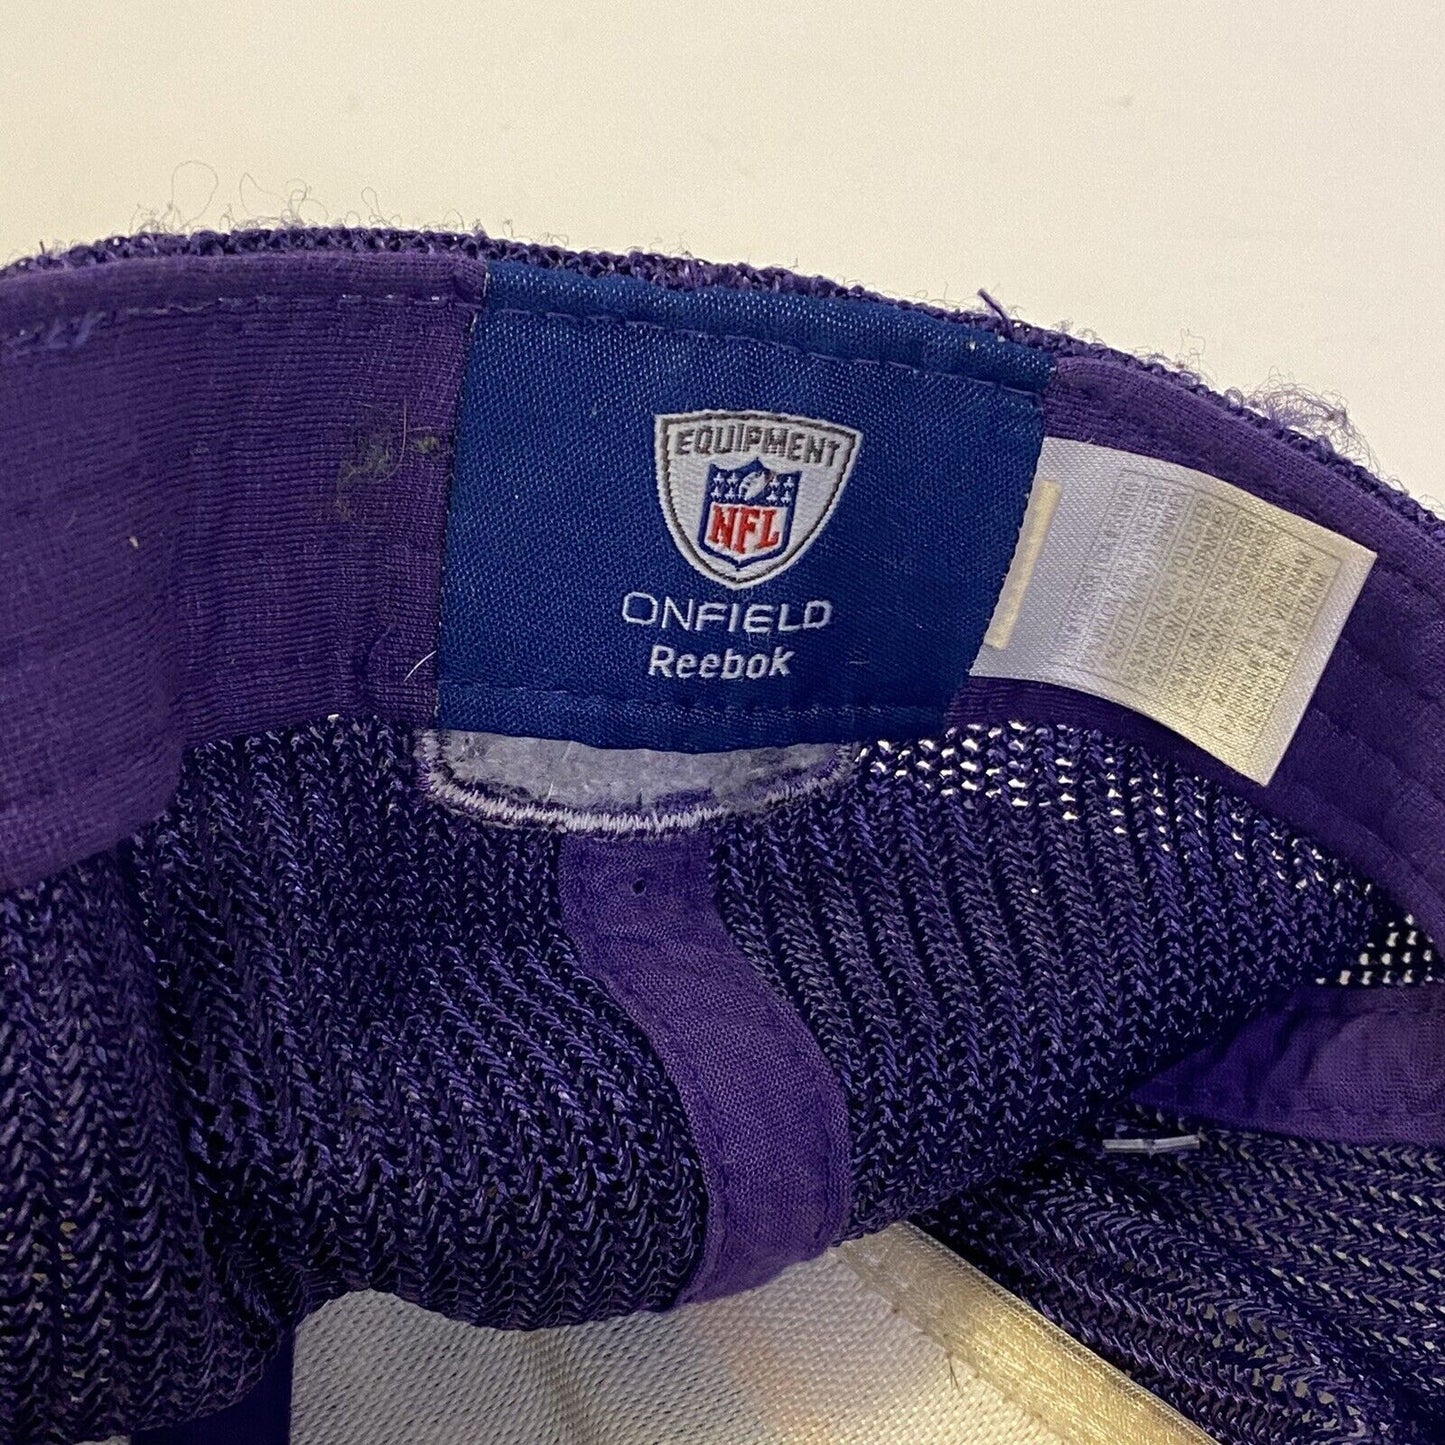 Reebok Minnesota Vikings Purple/Yellow (OSFA) NFL EQUIPMENT Mesh Trucker Hat